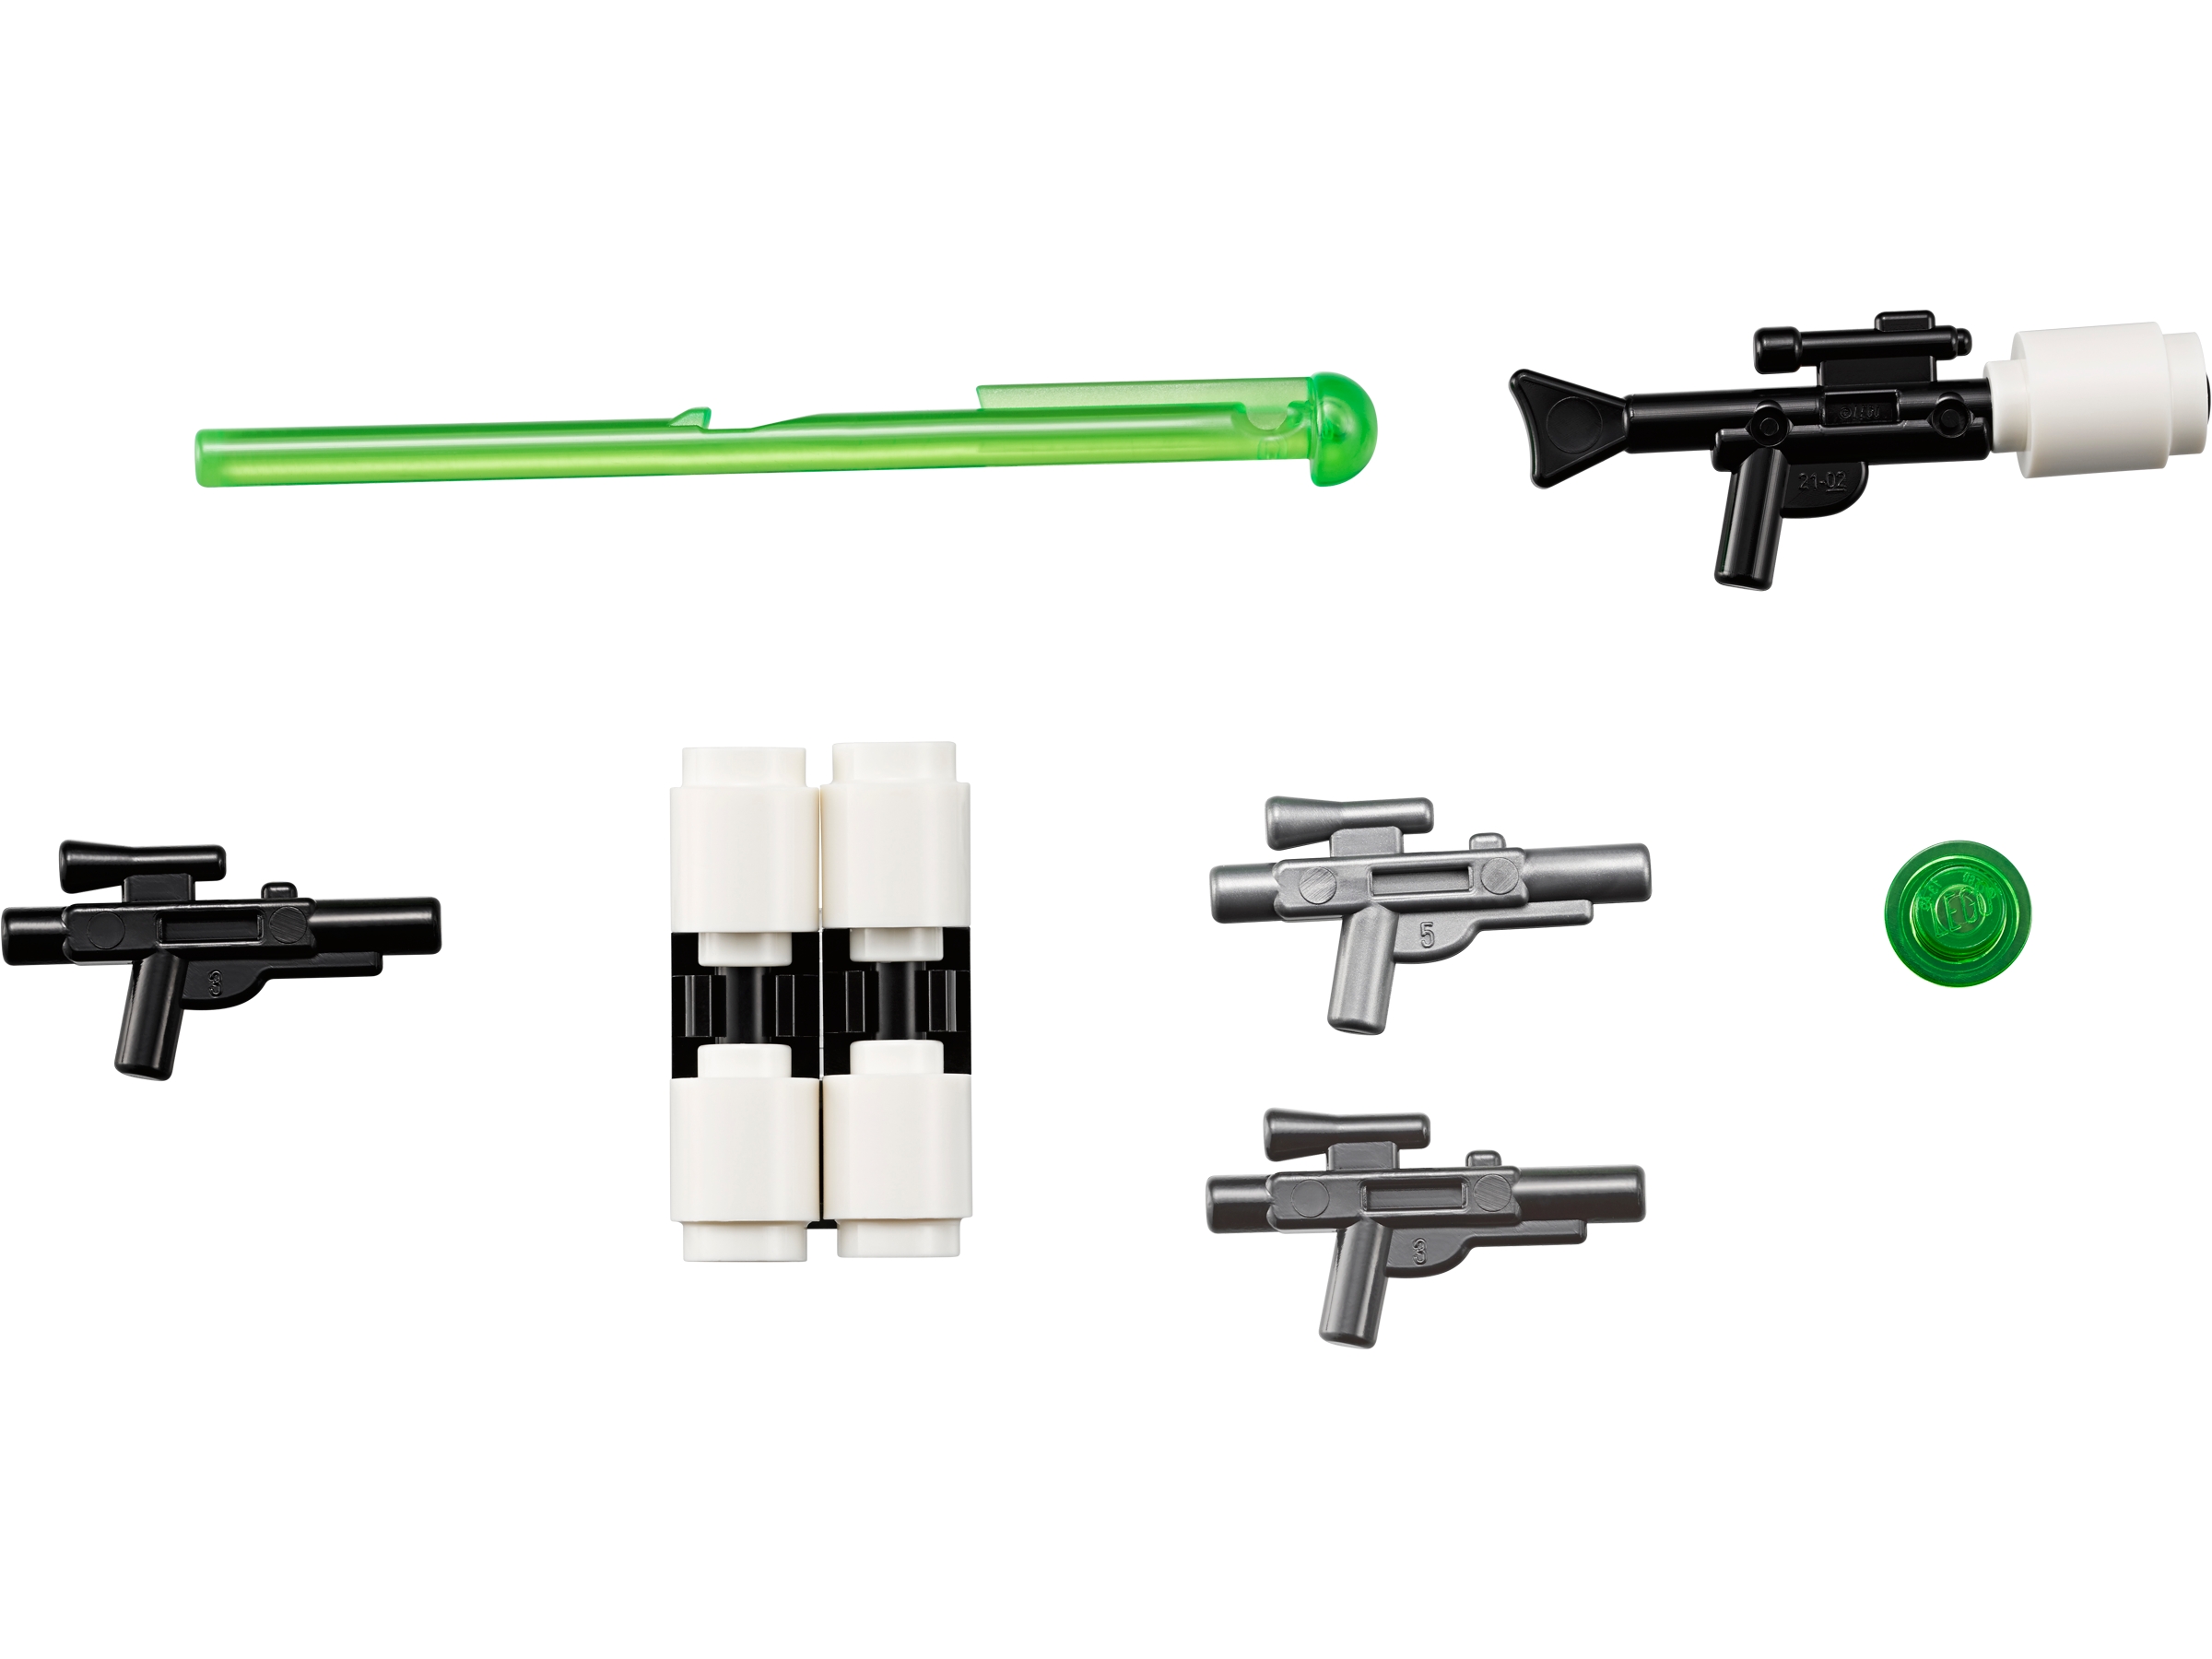 Lego Star Wars 10X Stud blaster/gun projectile gun